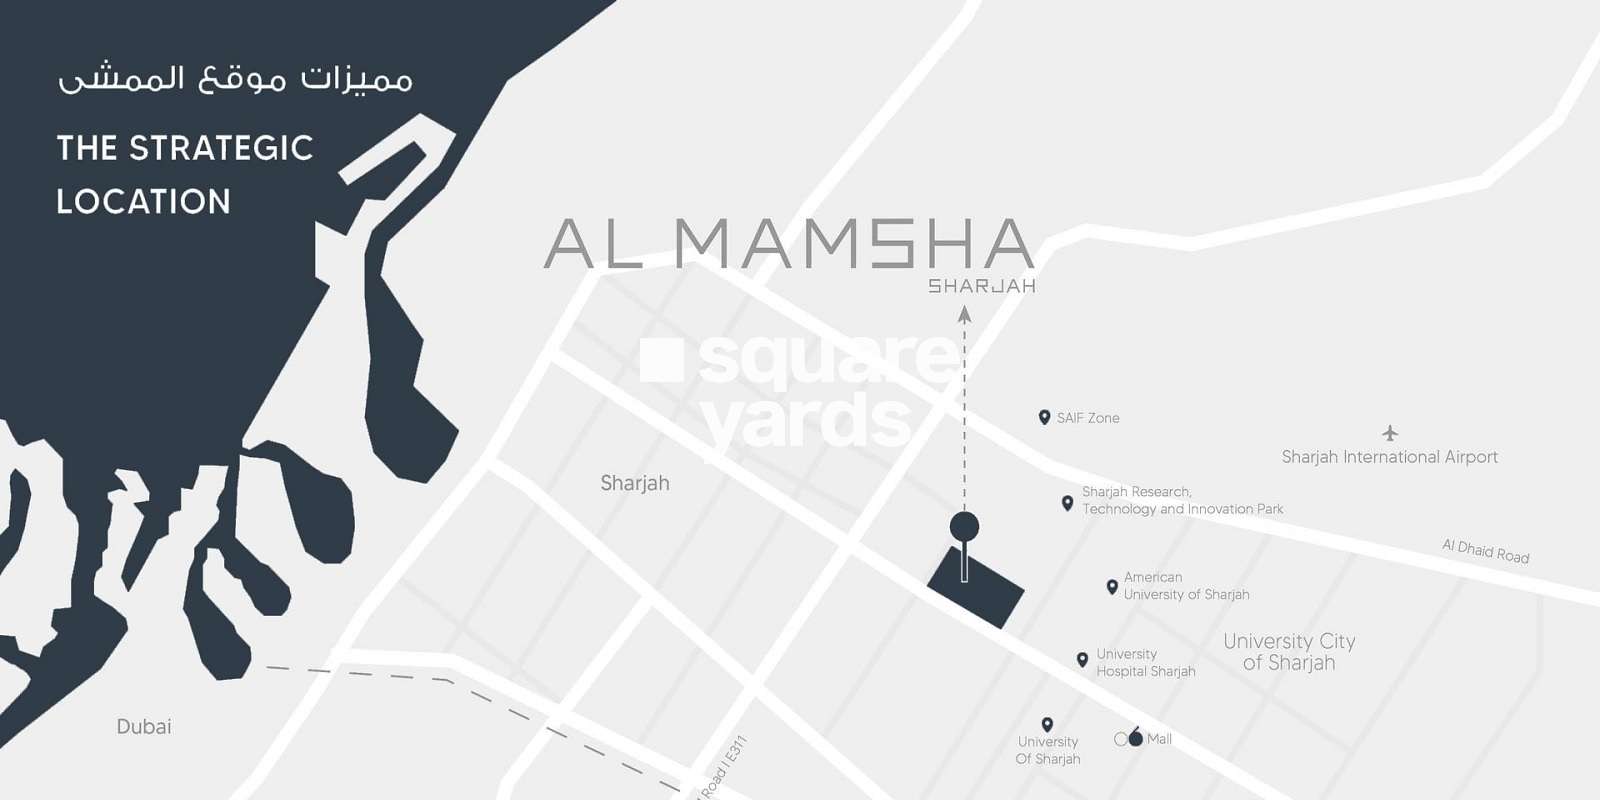 alef al mamsha project location image1